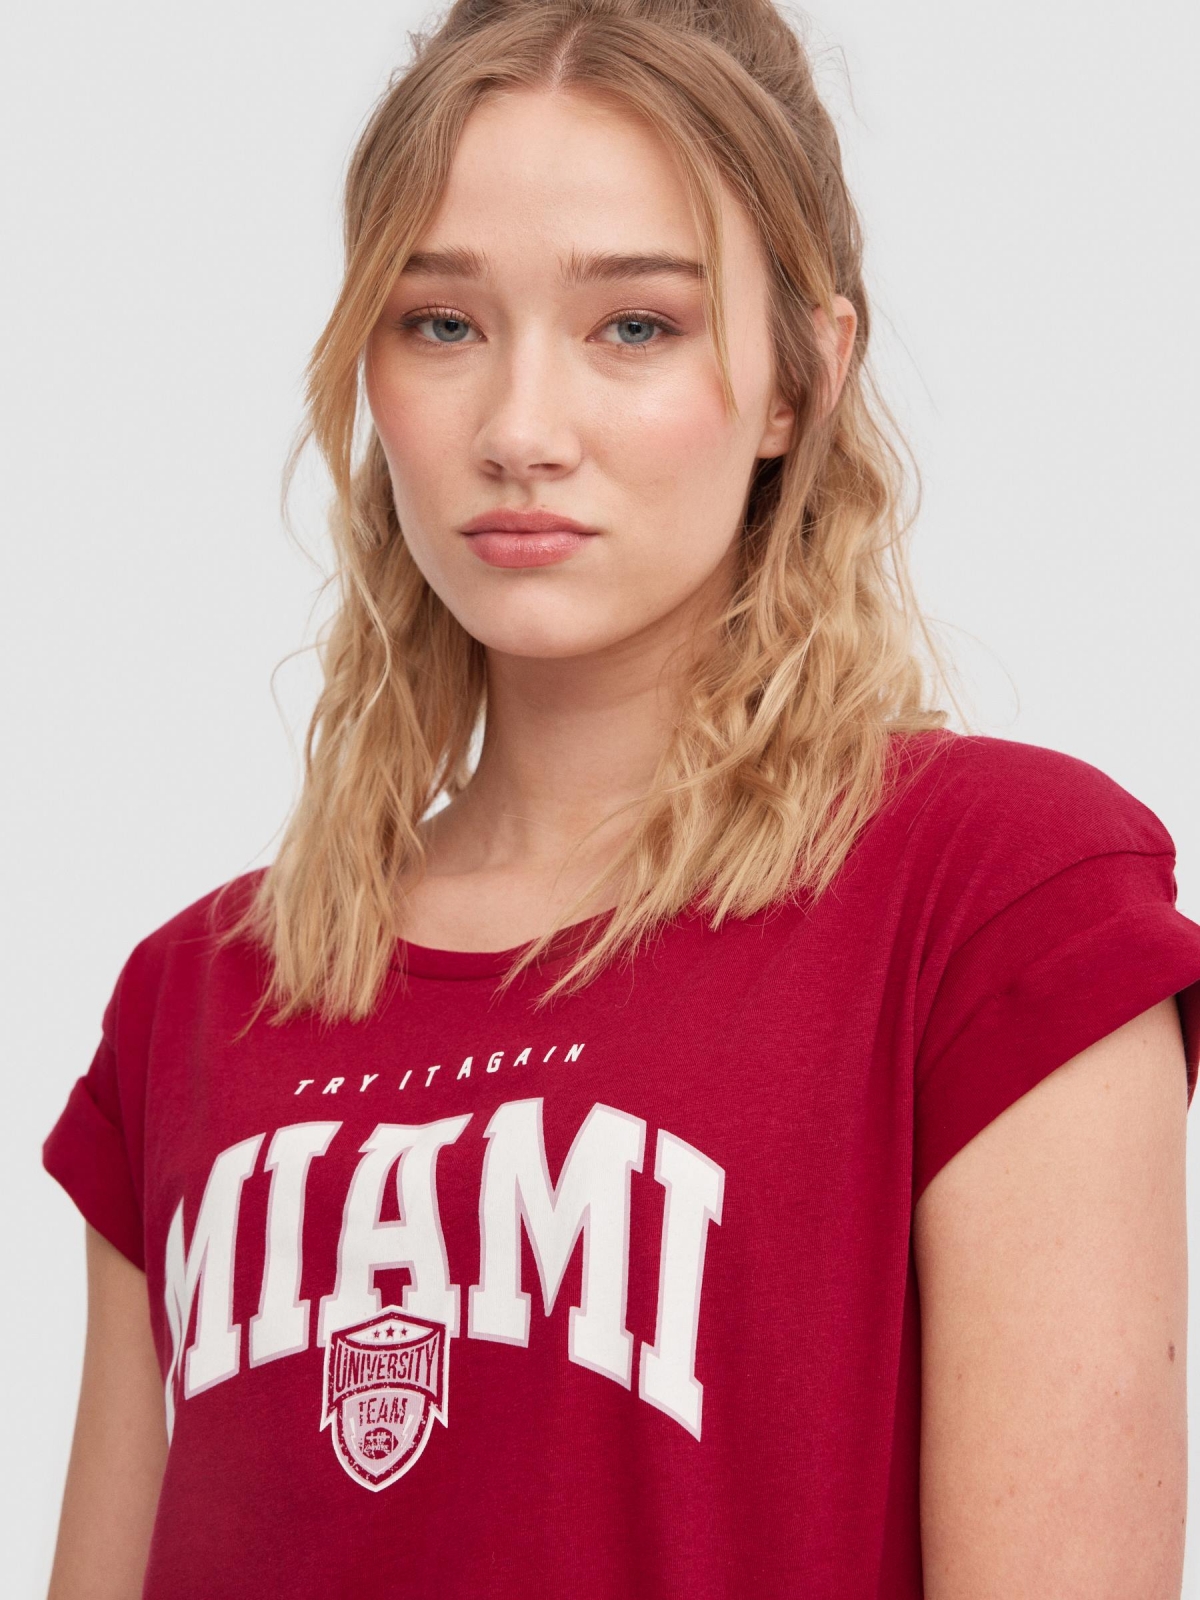 T-shirt Universidade de Miami granada vista detalhe